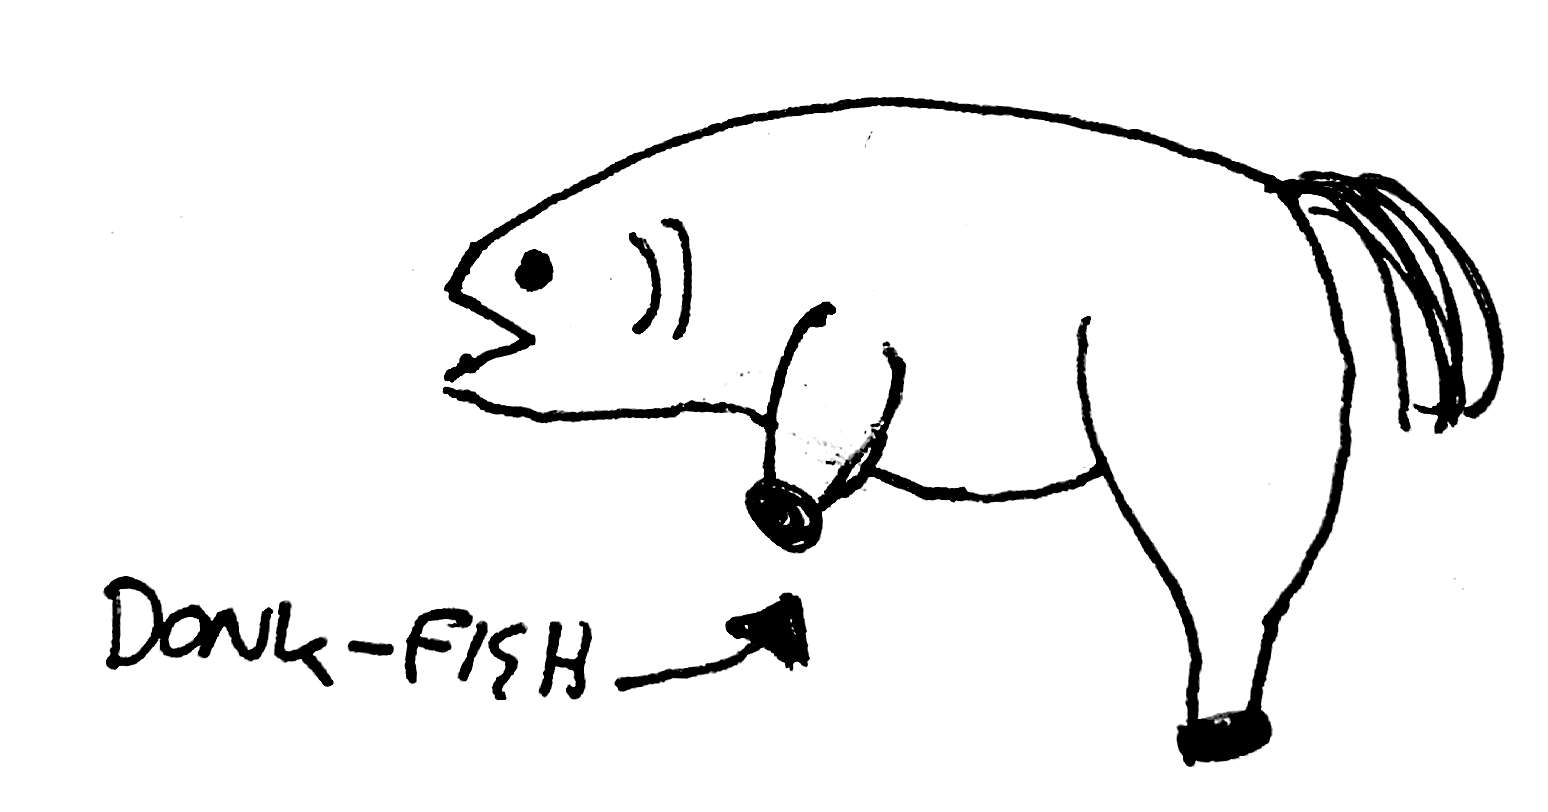 Donk fish sketch